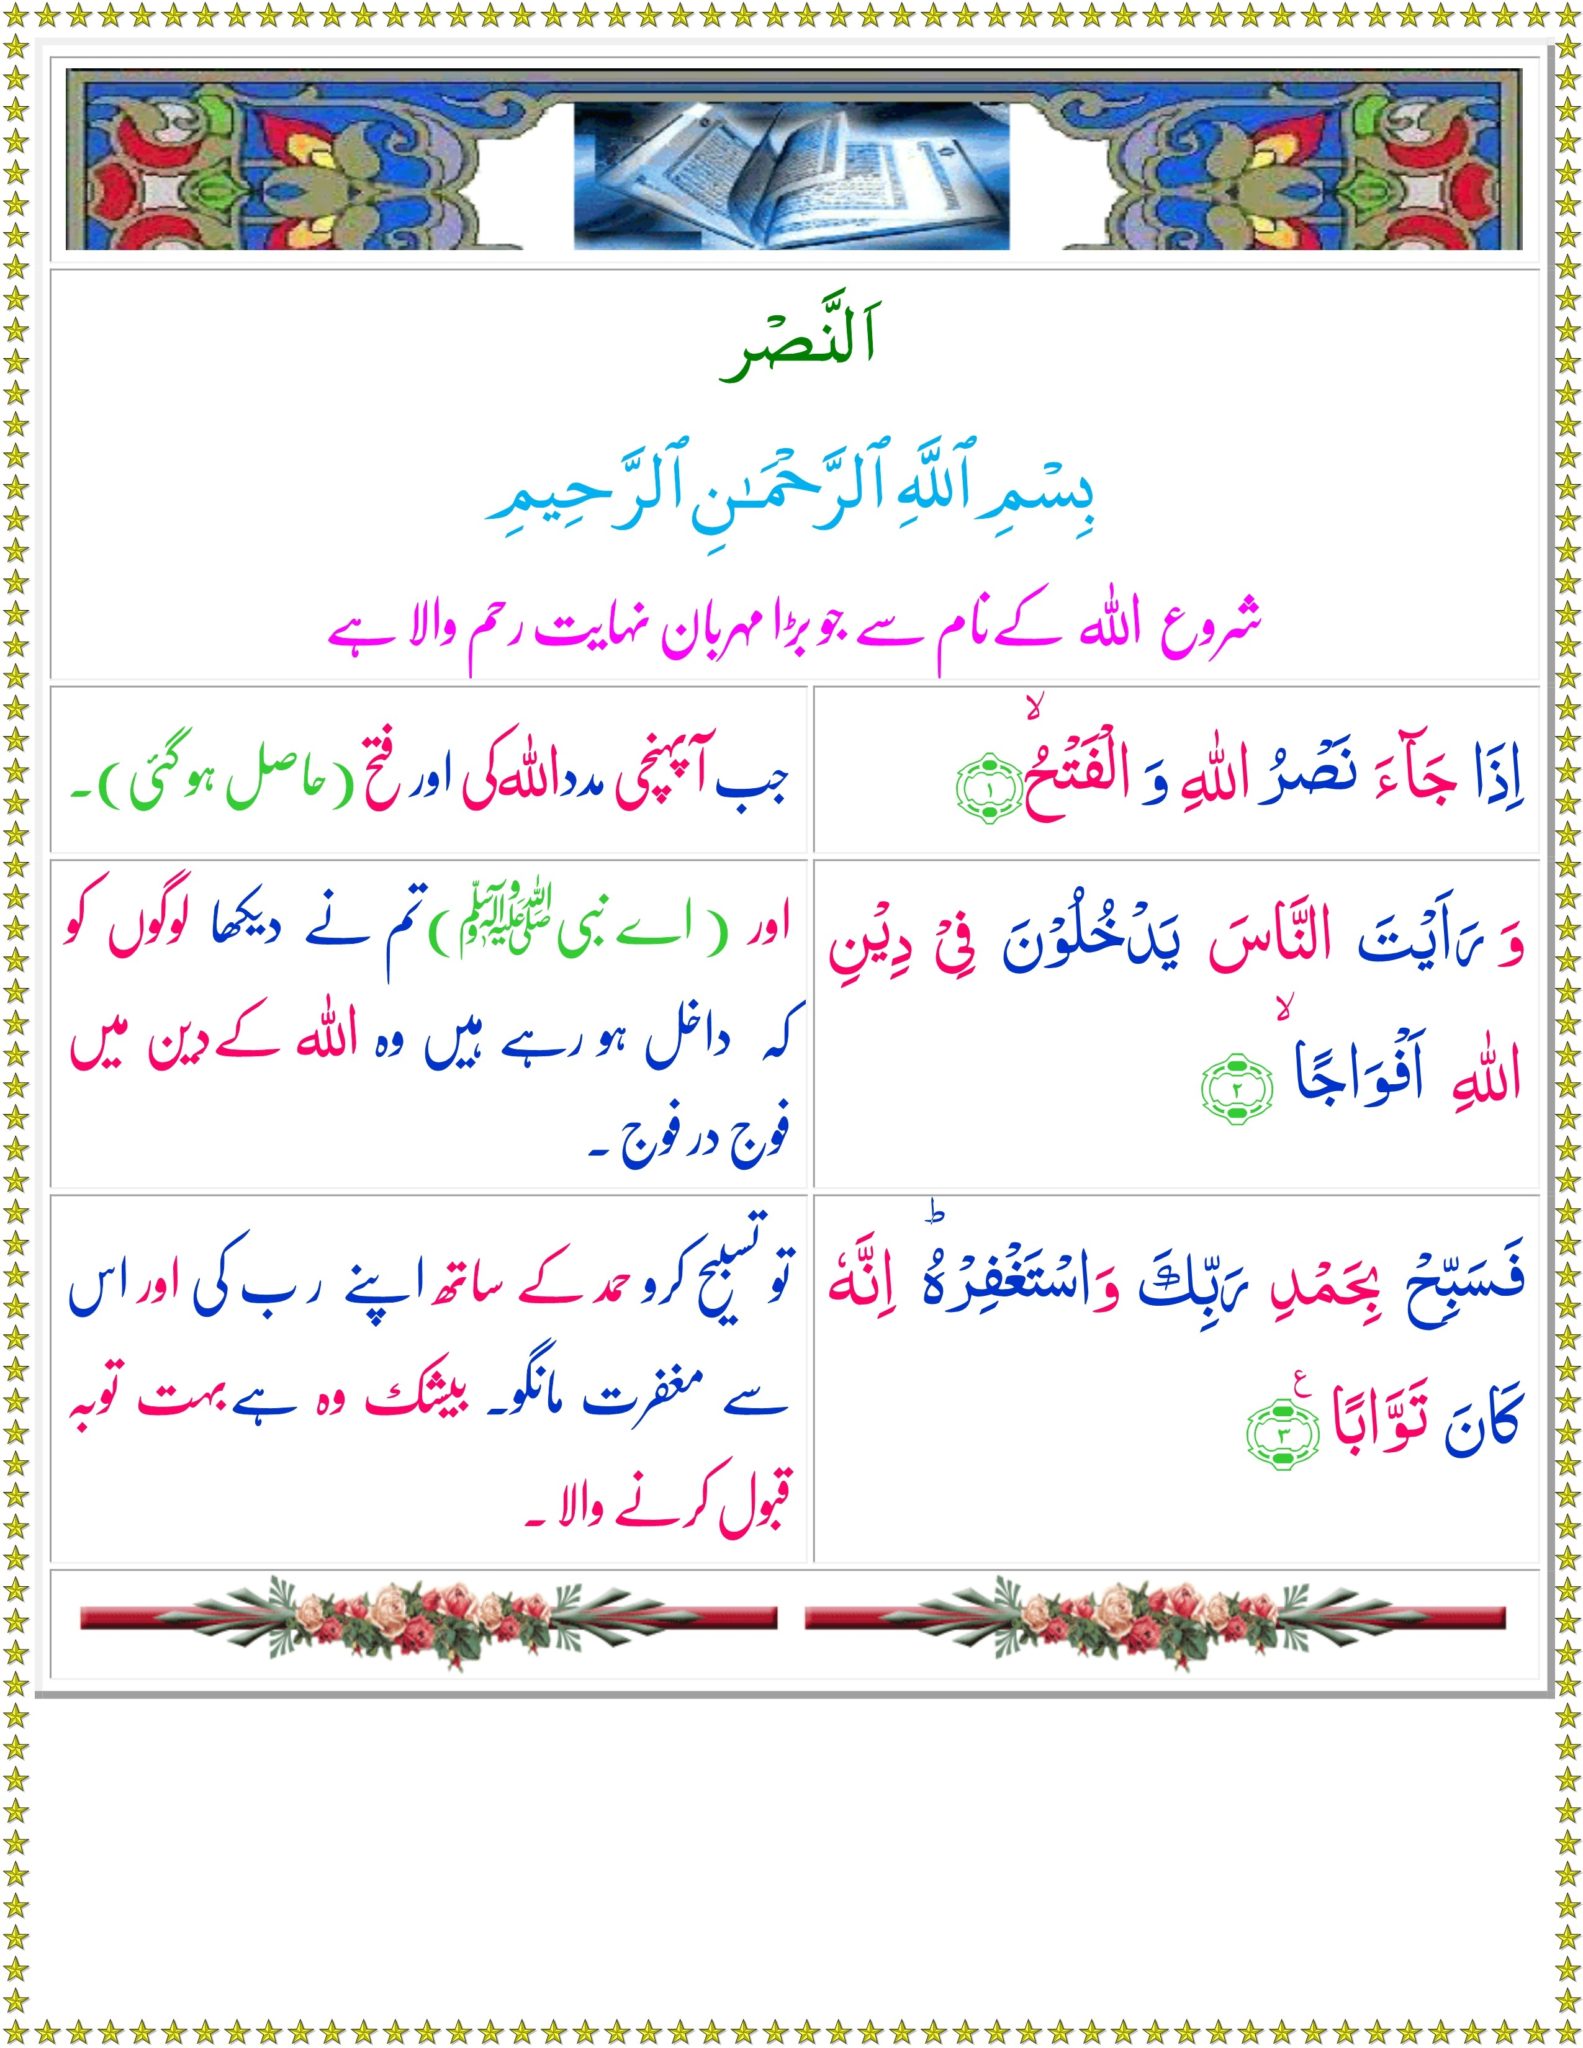 Surah Nasr translation in Urdu, Hindi